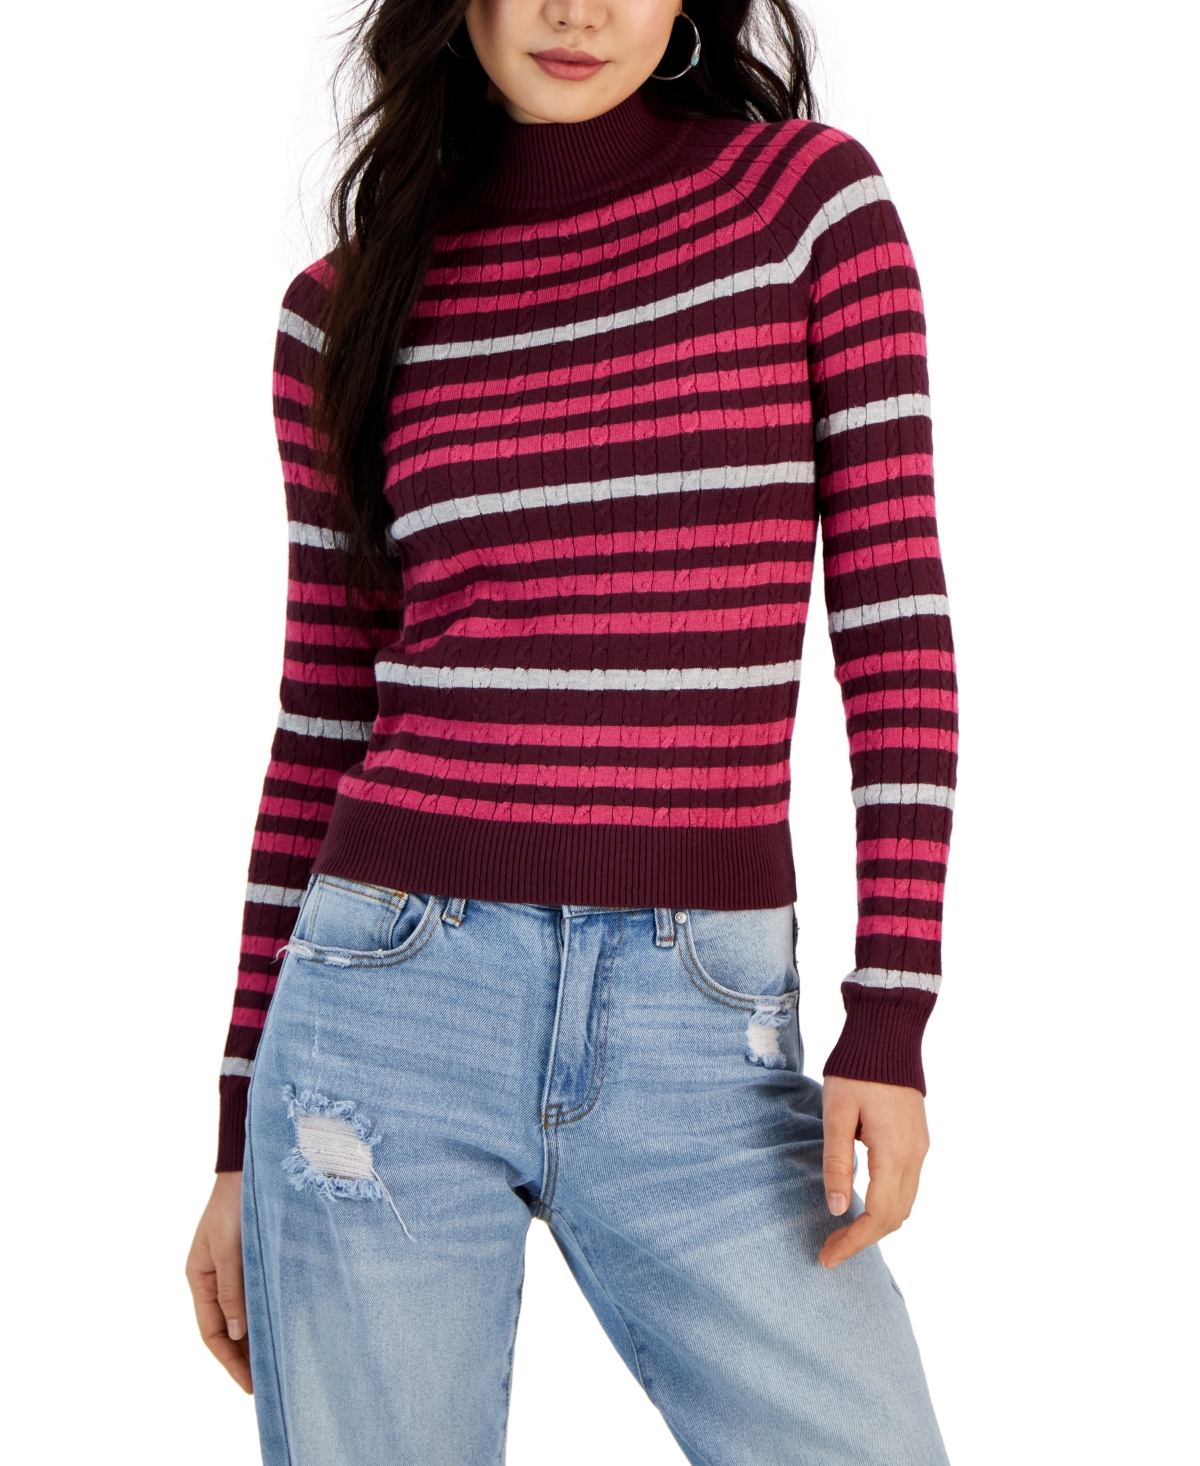 Juniors' Striped Mini-Cable Mock Neck Sweater - Brown Plum Combo